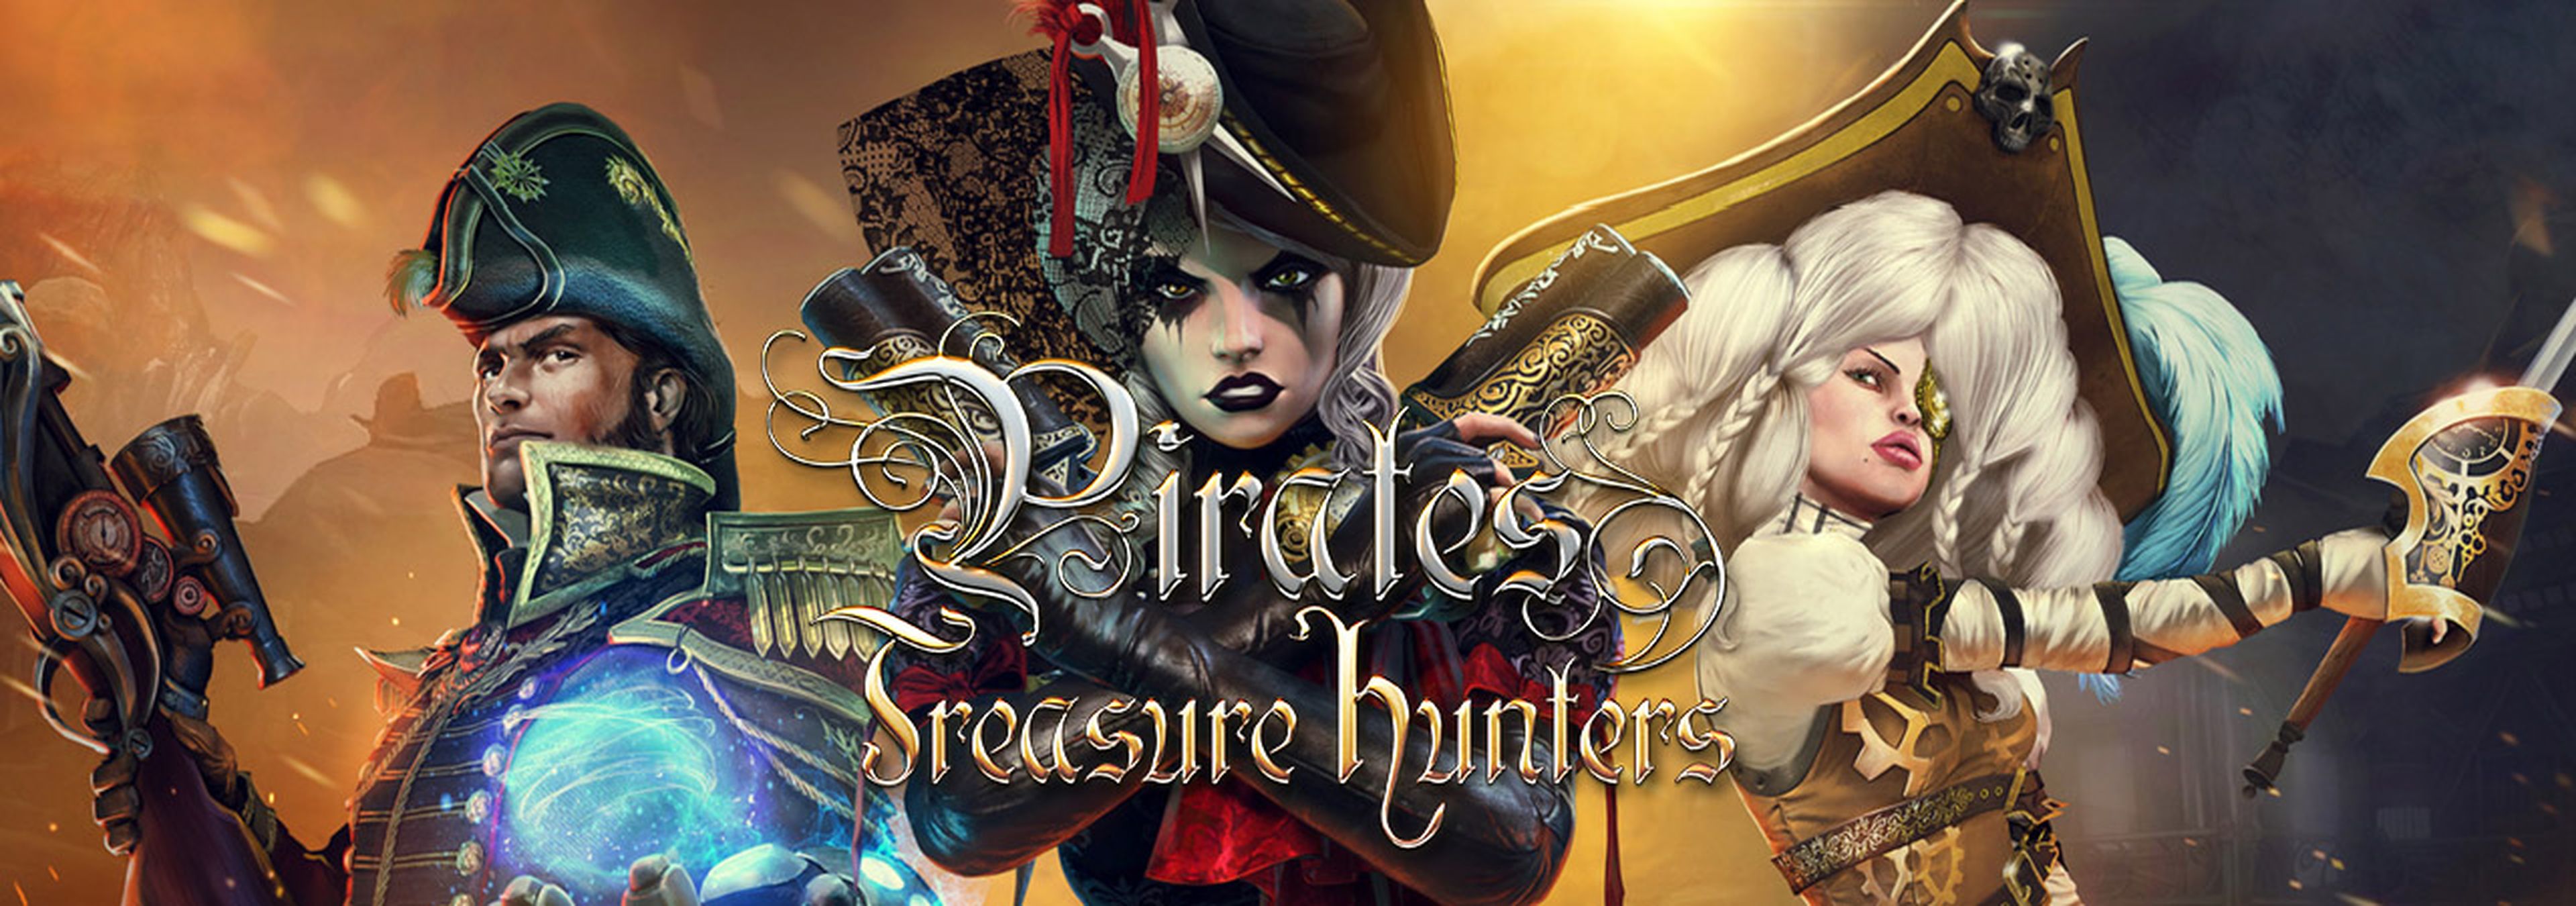 Pirates Treasure Hunters beta disponible